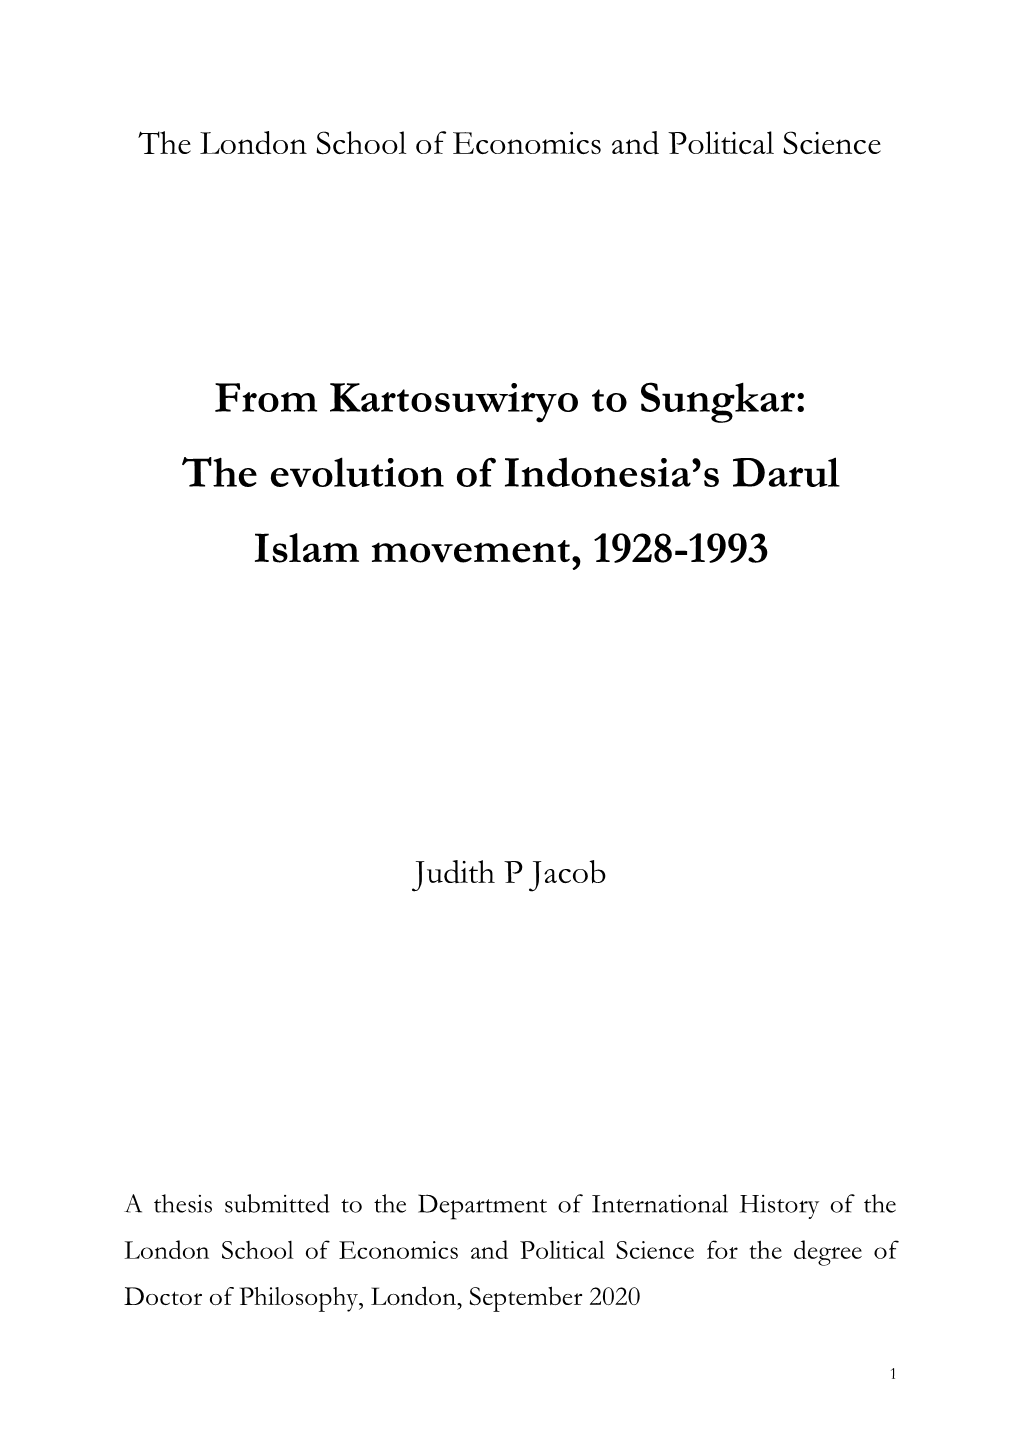 From Kartosuwiryo to Sungkar: the Evolution of Indonesia's Darul Islam